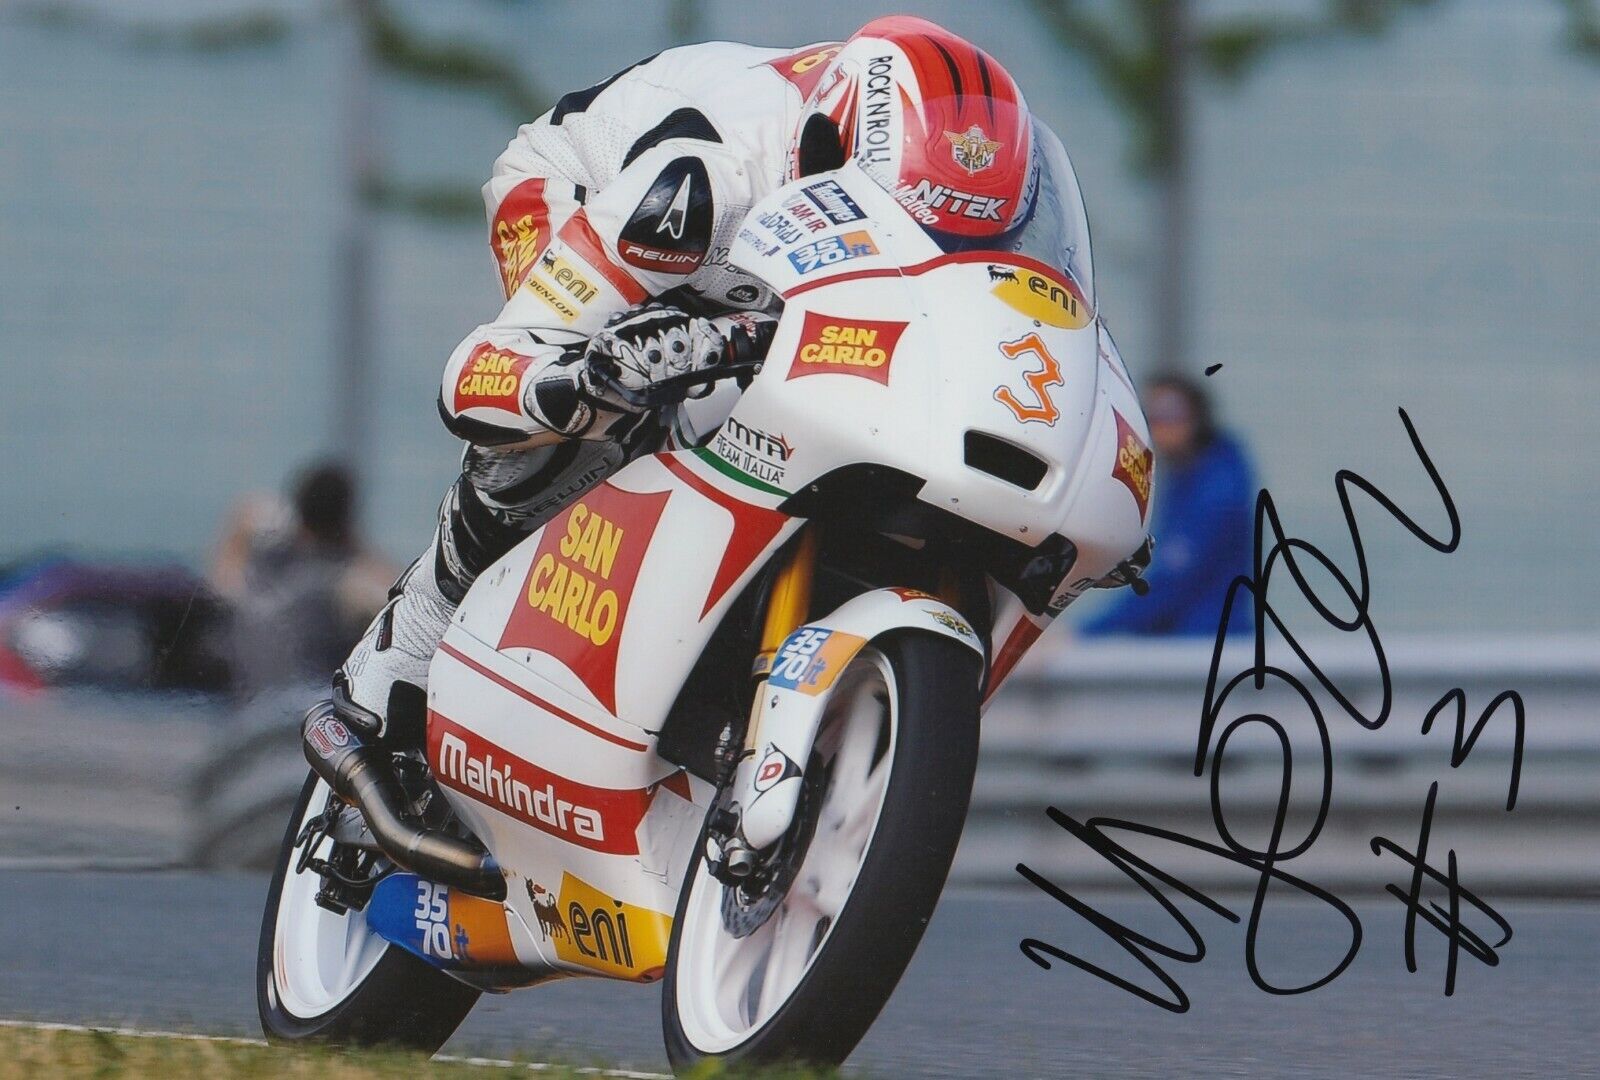 Matteo Ferrari Hand Signed 12x8 Photo Poster painting - MotoGP Autograph.